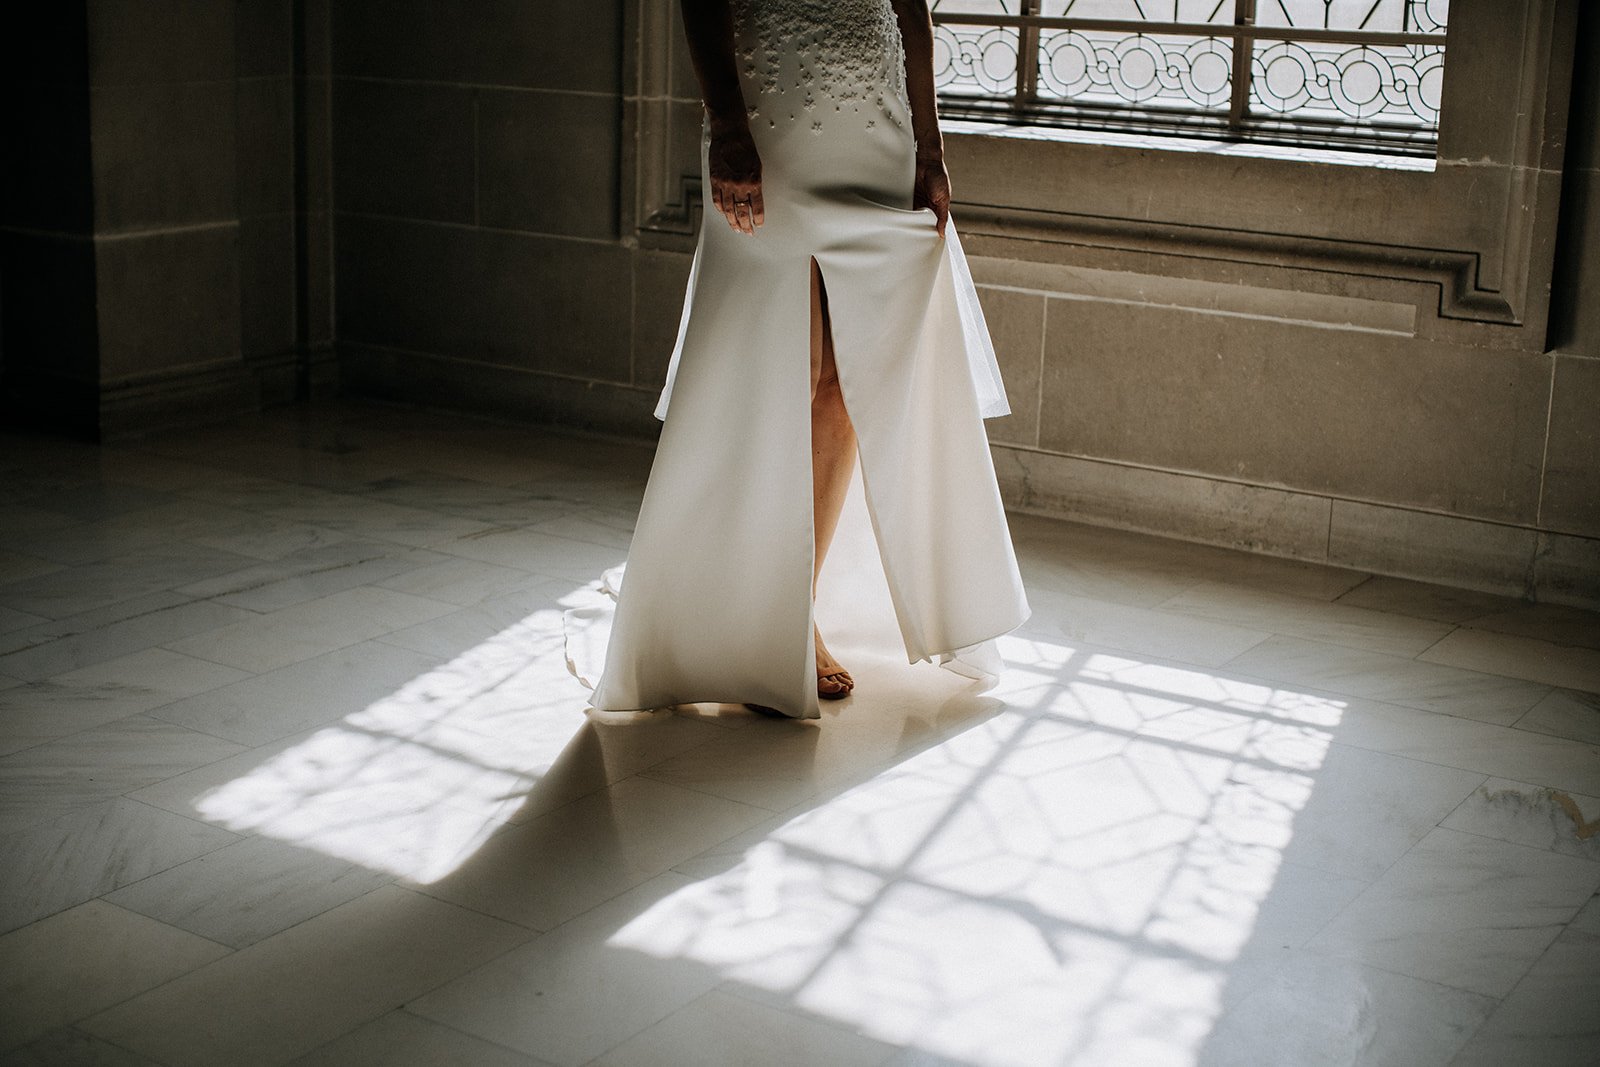  brides lower body holding her dress  